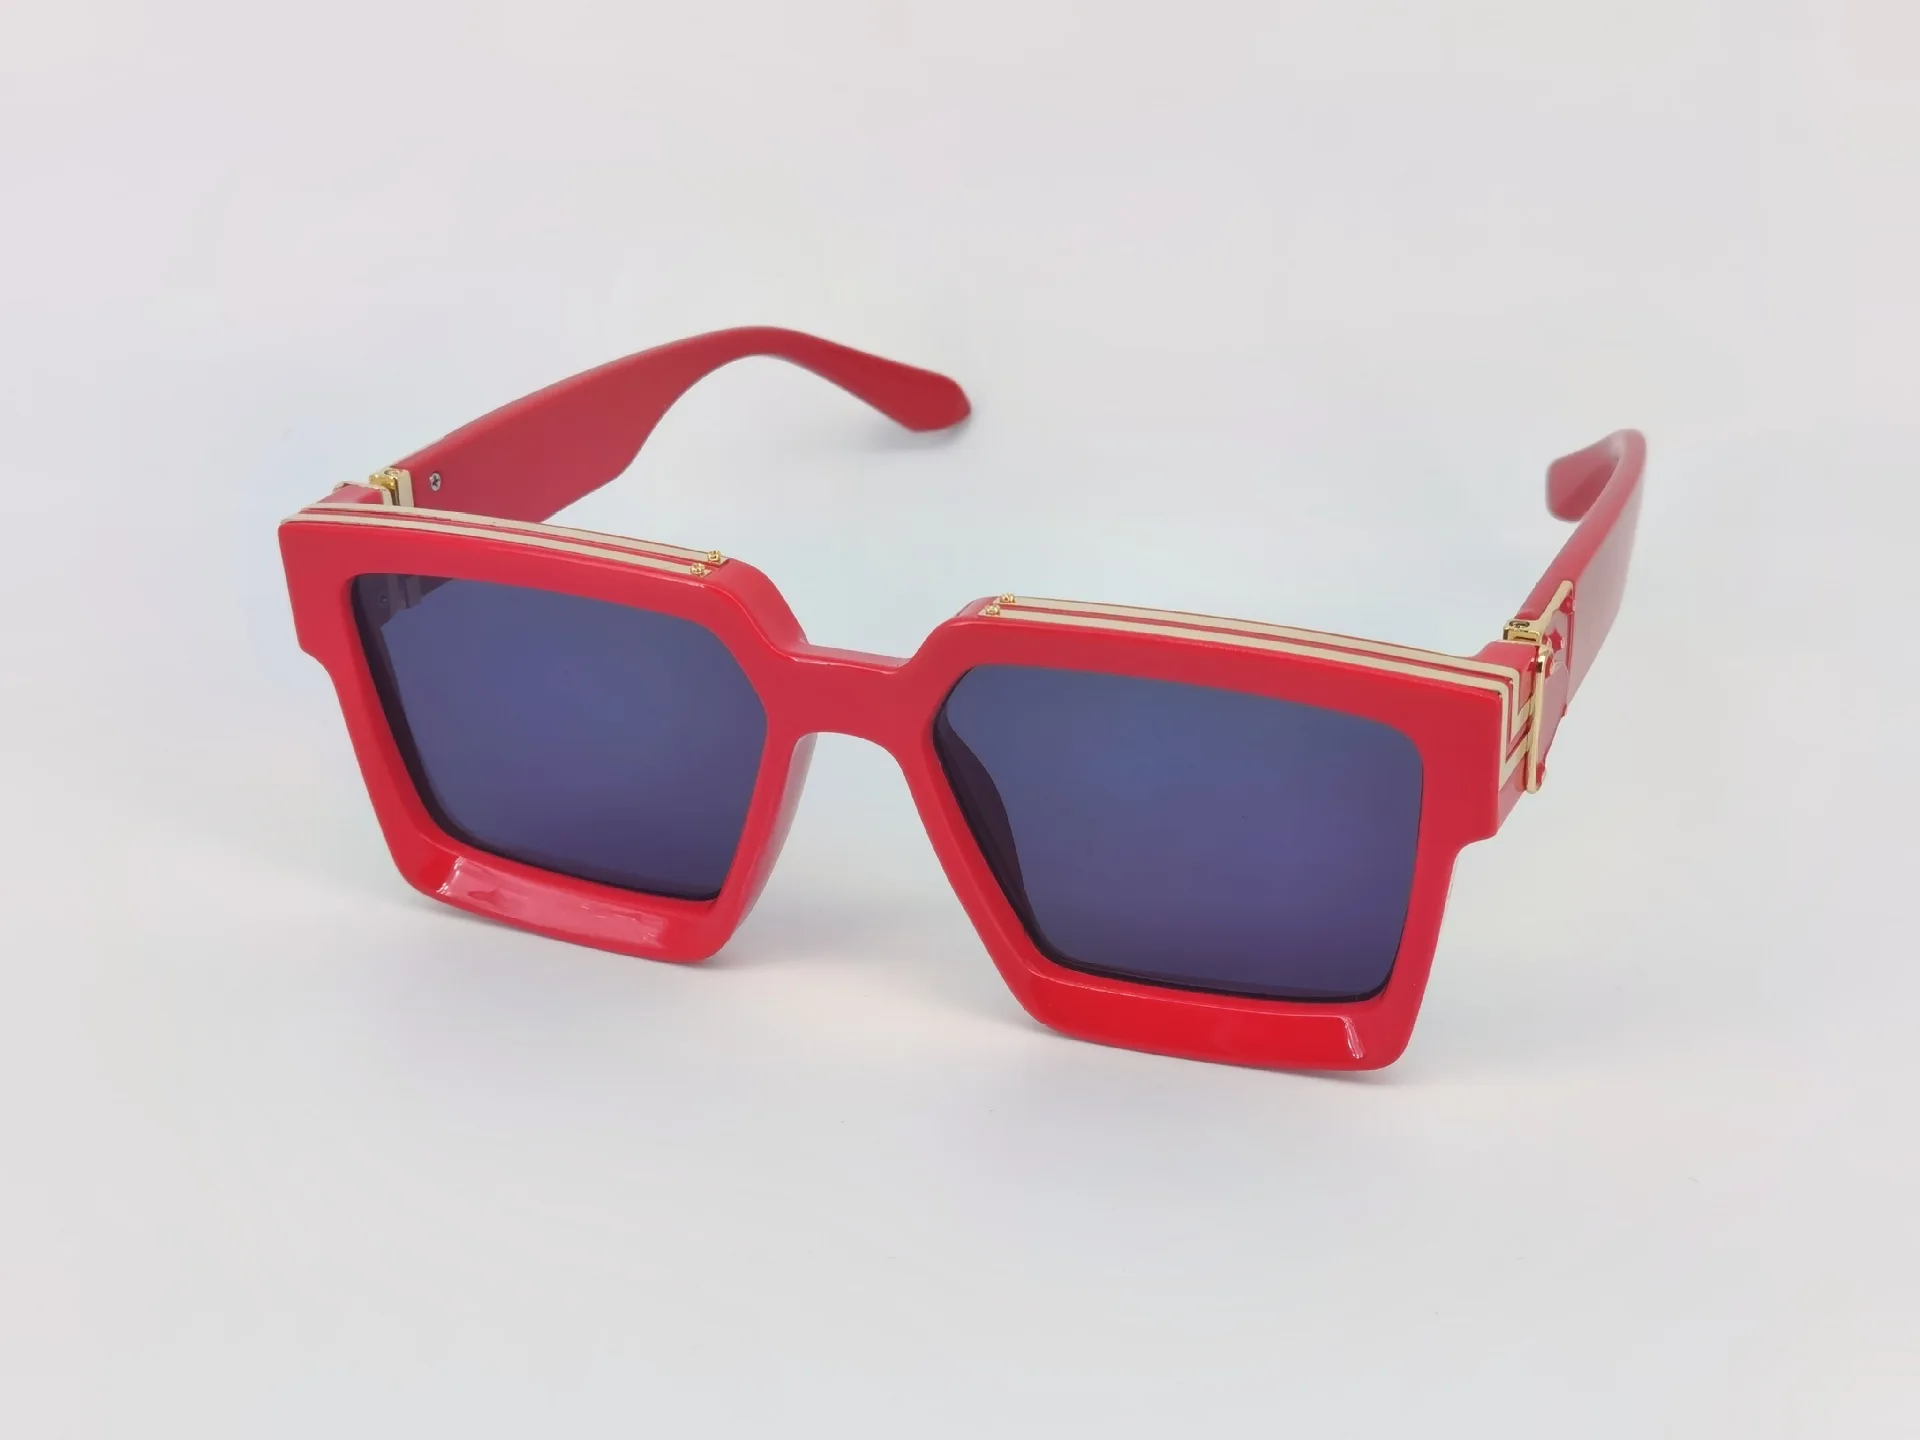 80677 Millionaire Fashion Sunglasses Brand Square Men Women